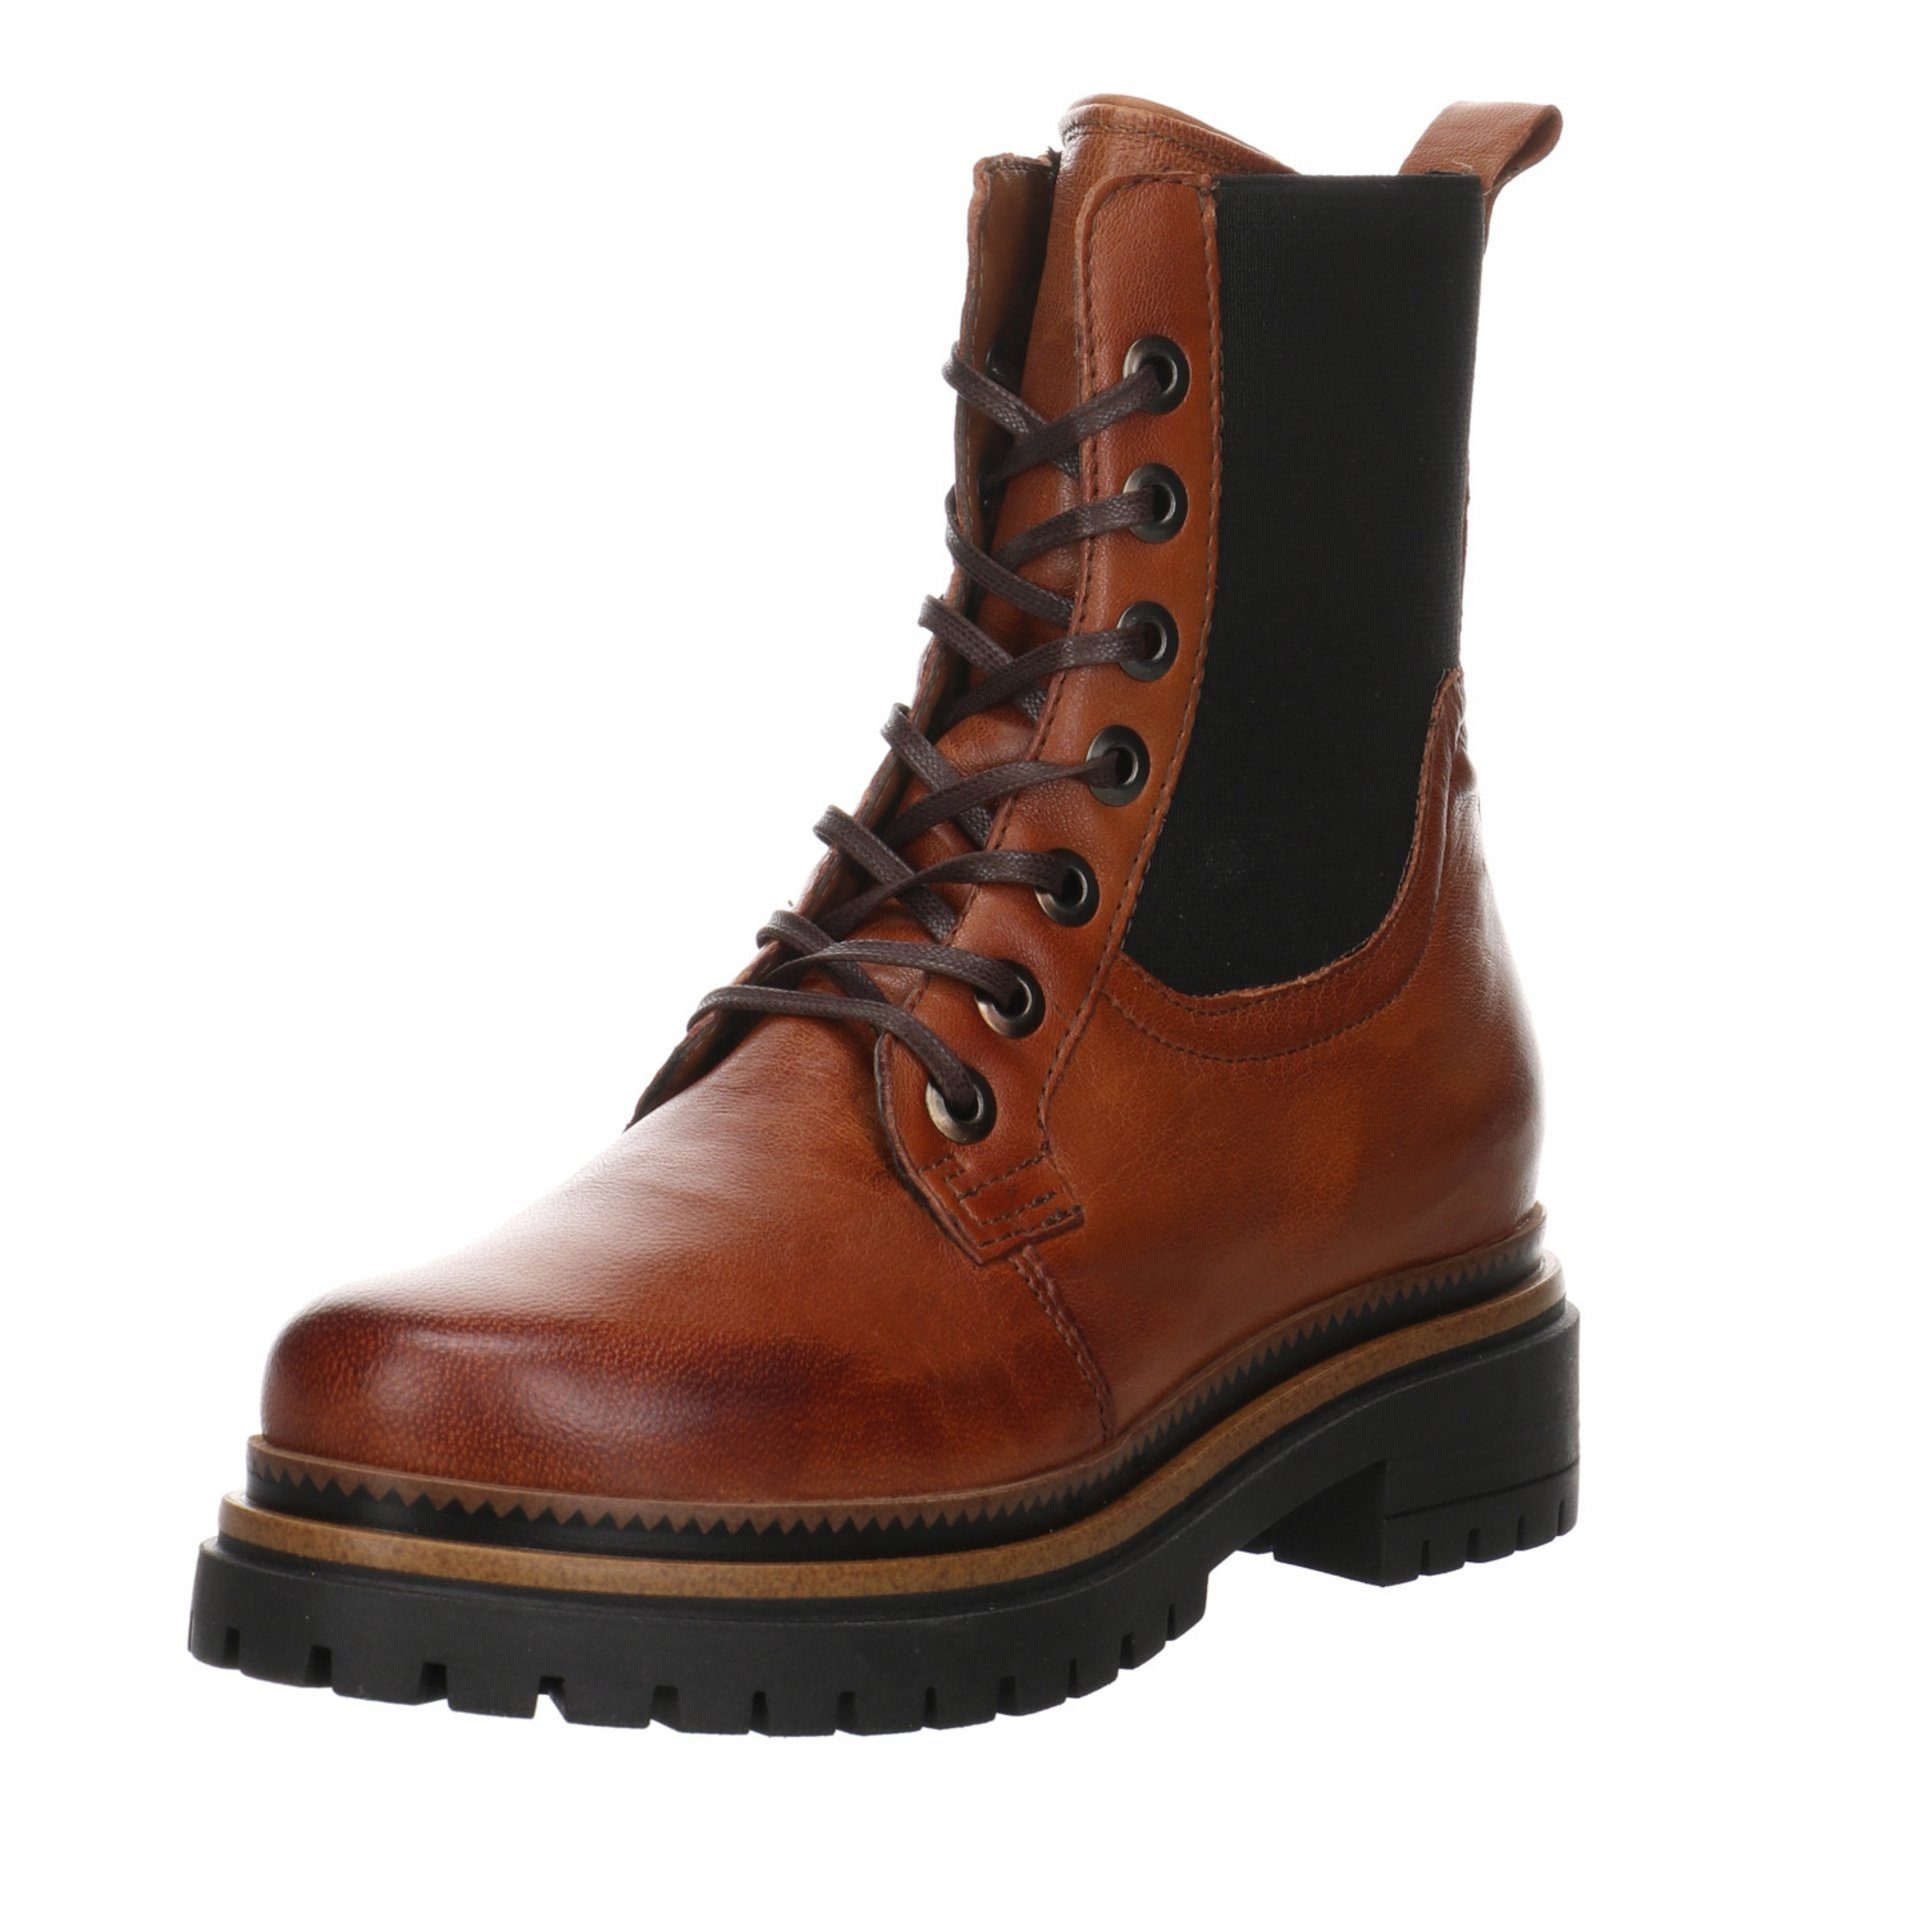 Mjus Boots Elegant Freizeit Leder-/Textilkombination Сапожки на шнуровкеette Leder-/Textilkombination